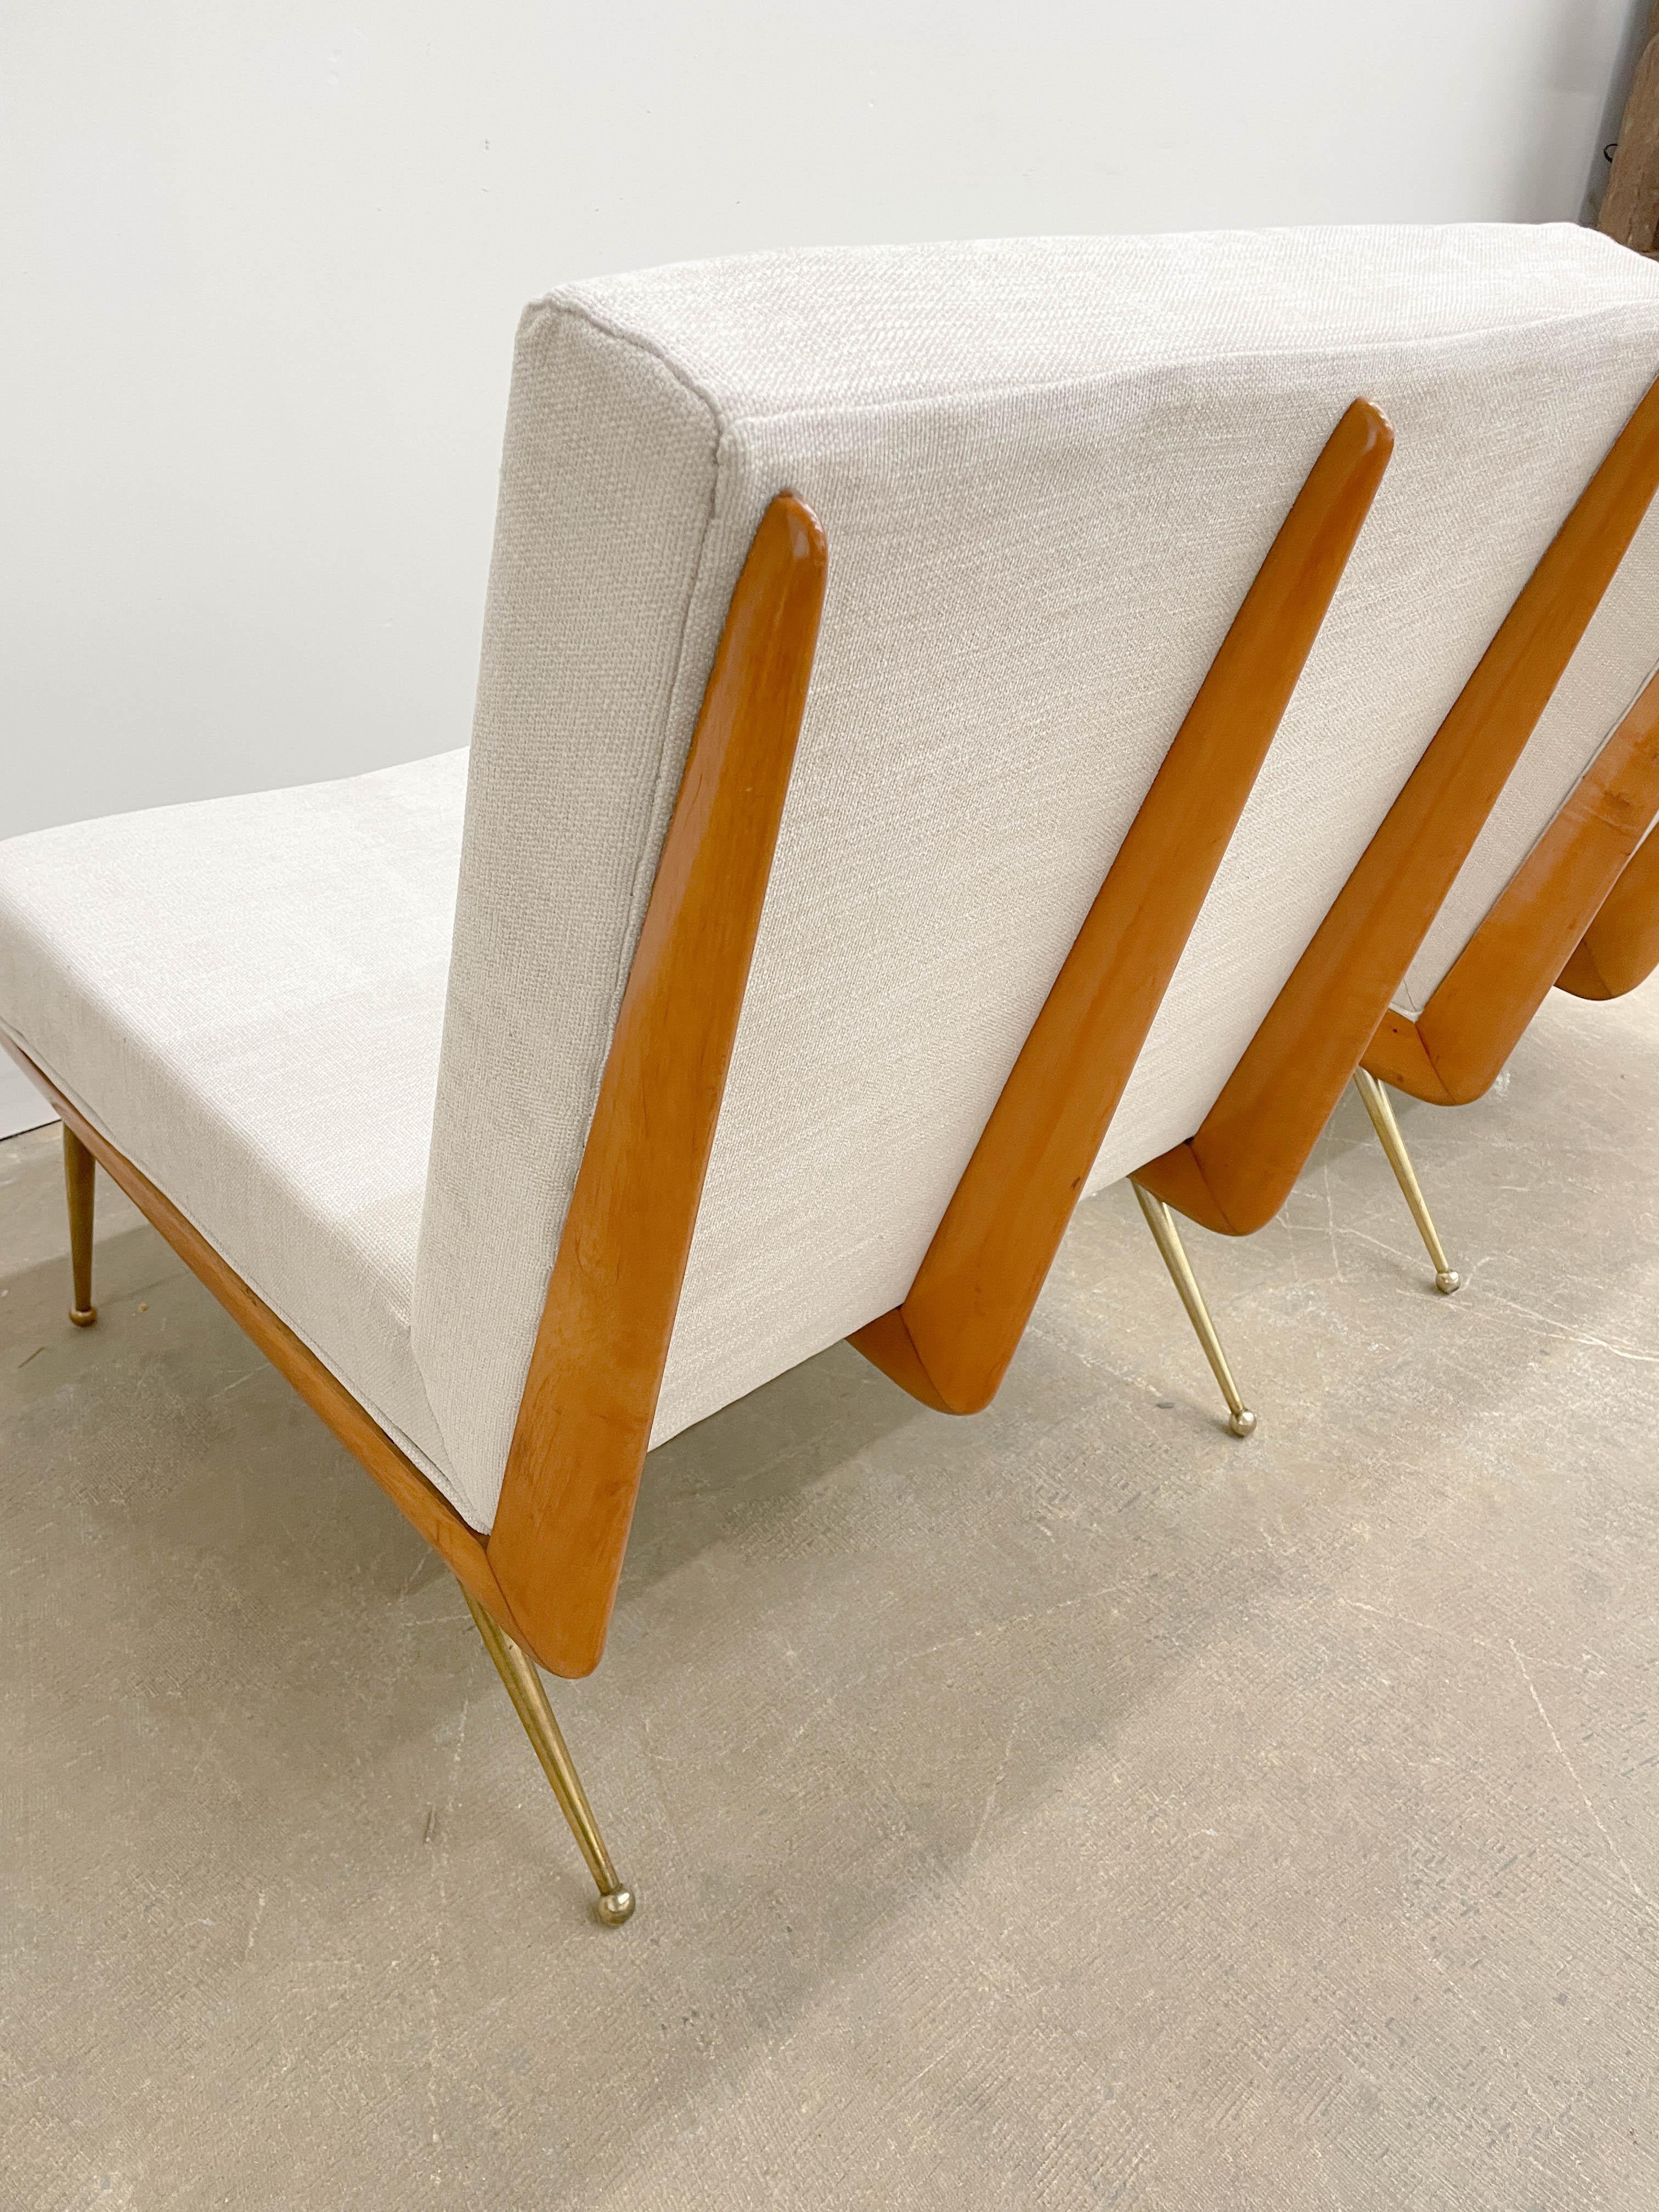 Rare Mid Century Modern Boomerang Chairs by Artcraft / Robinson-Johnson 1